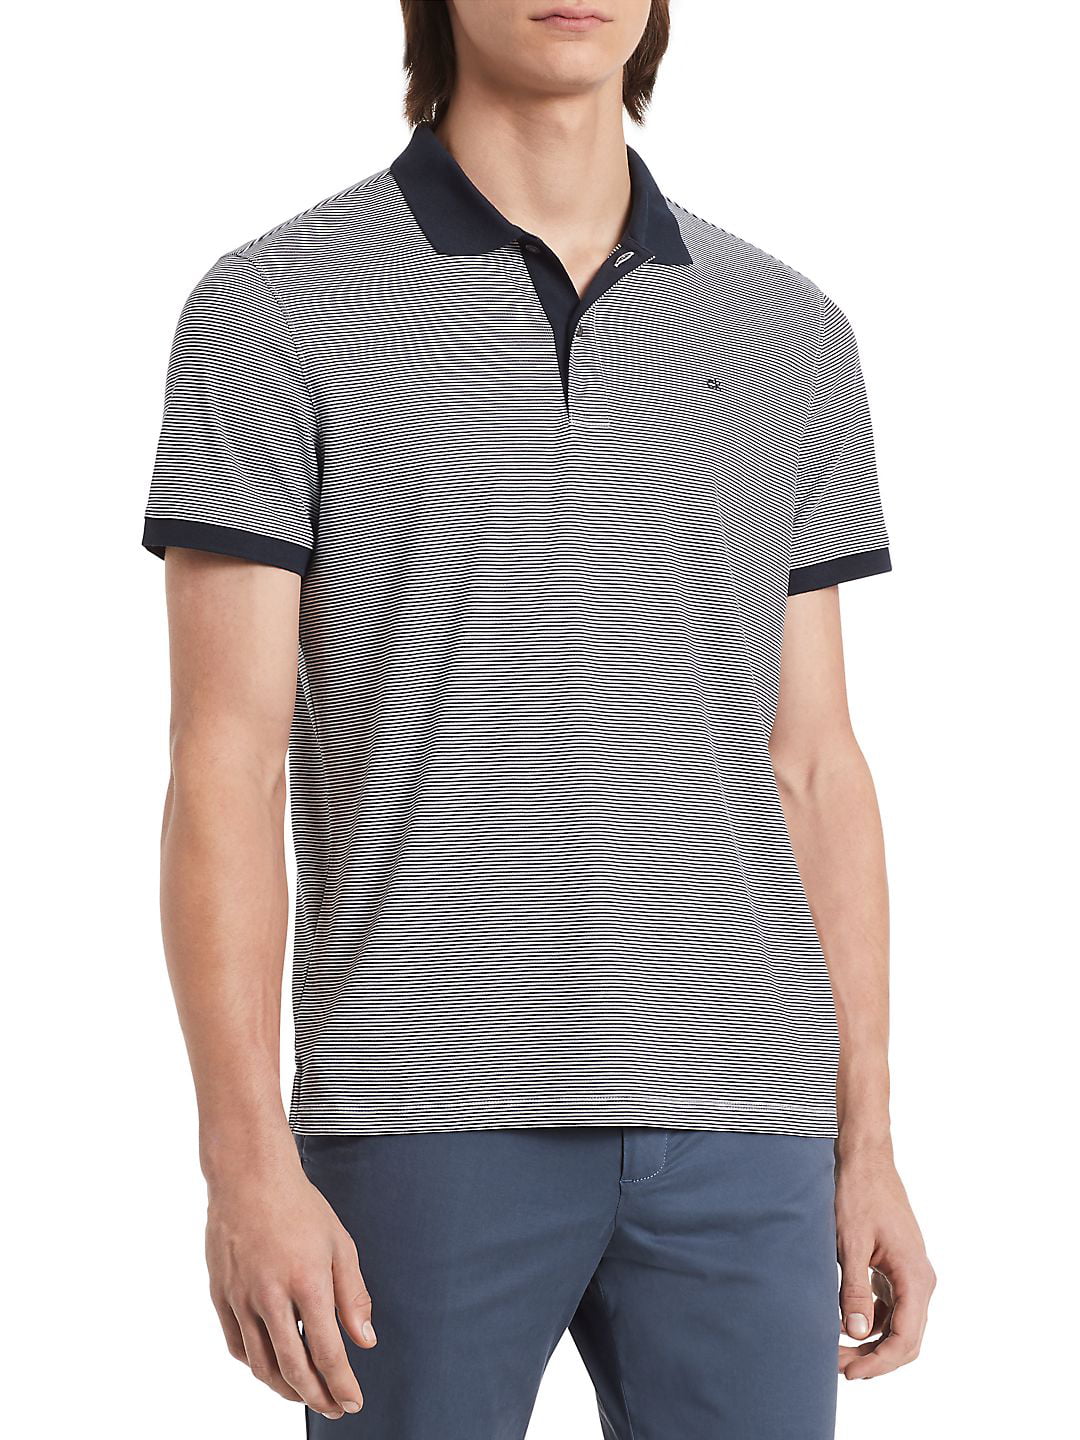 Calvin Klein - Striped Liquid Cotton Polo Shirt - Walmart.com - Walmart.com